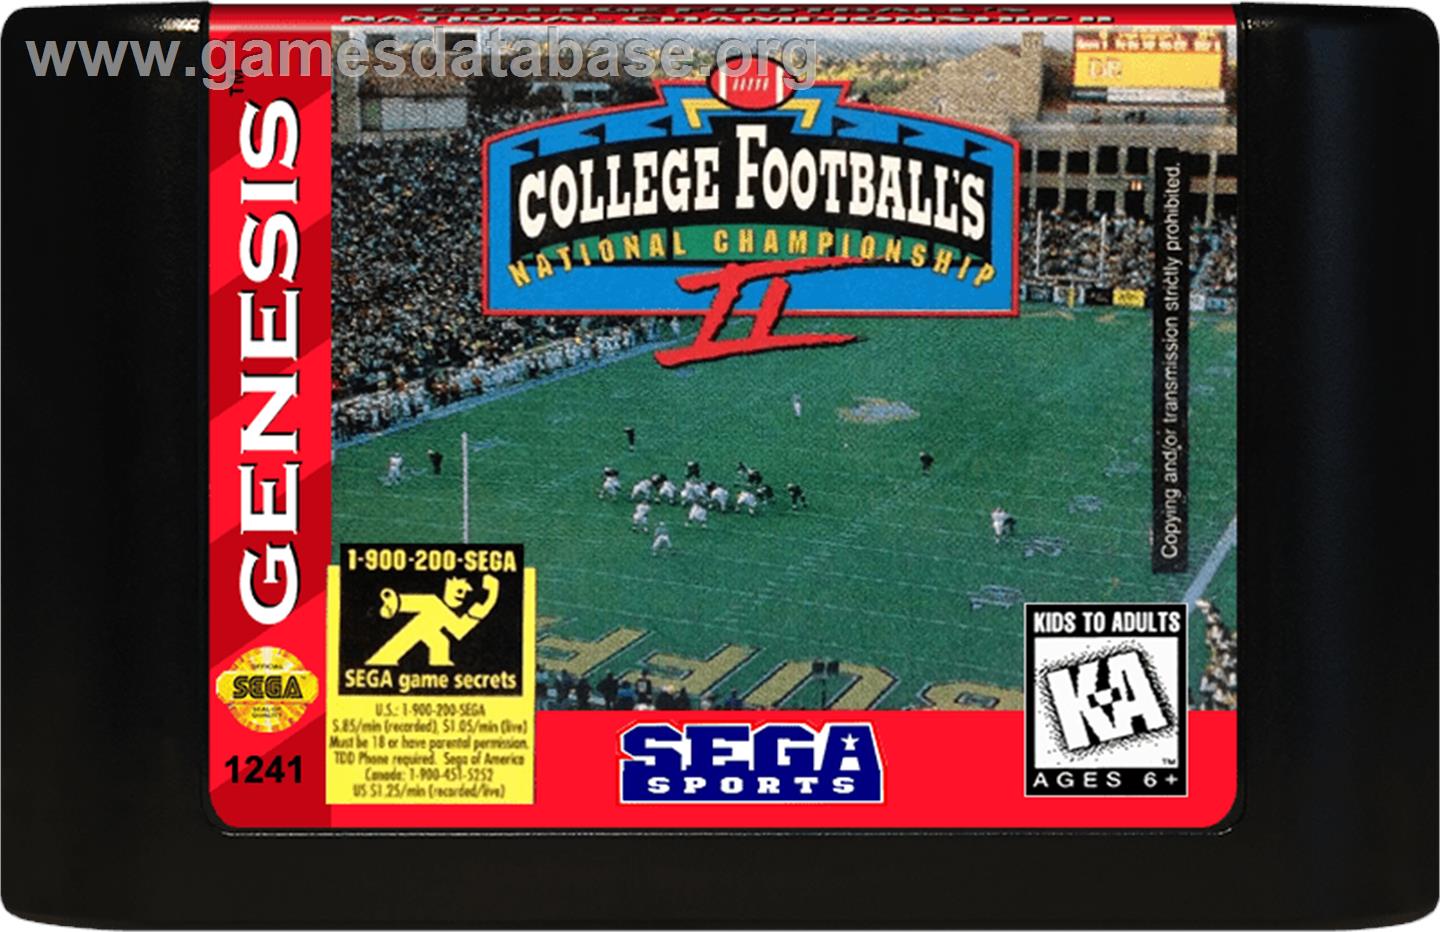 College Football's National Championship II - Sega Genesis - Artwork - Cartridge